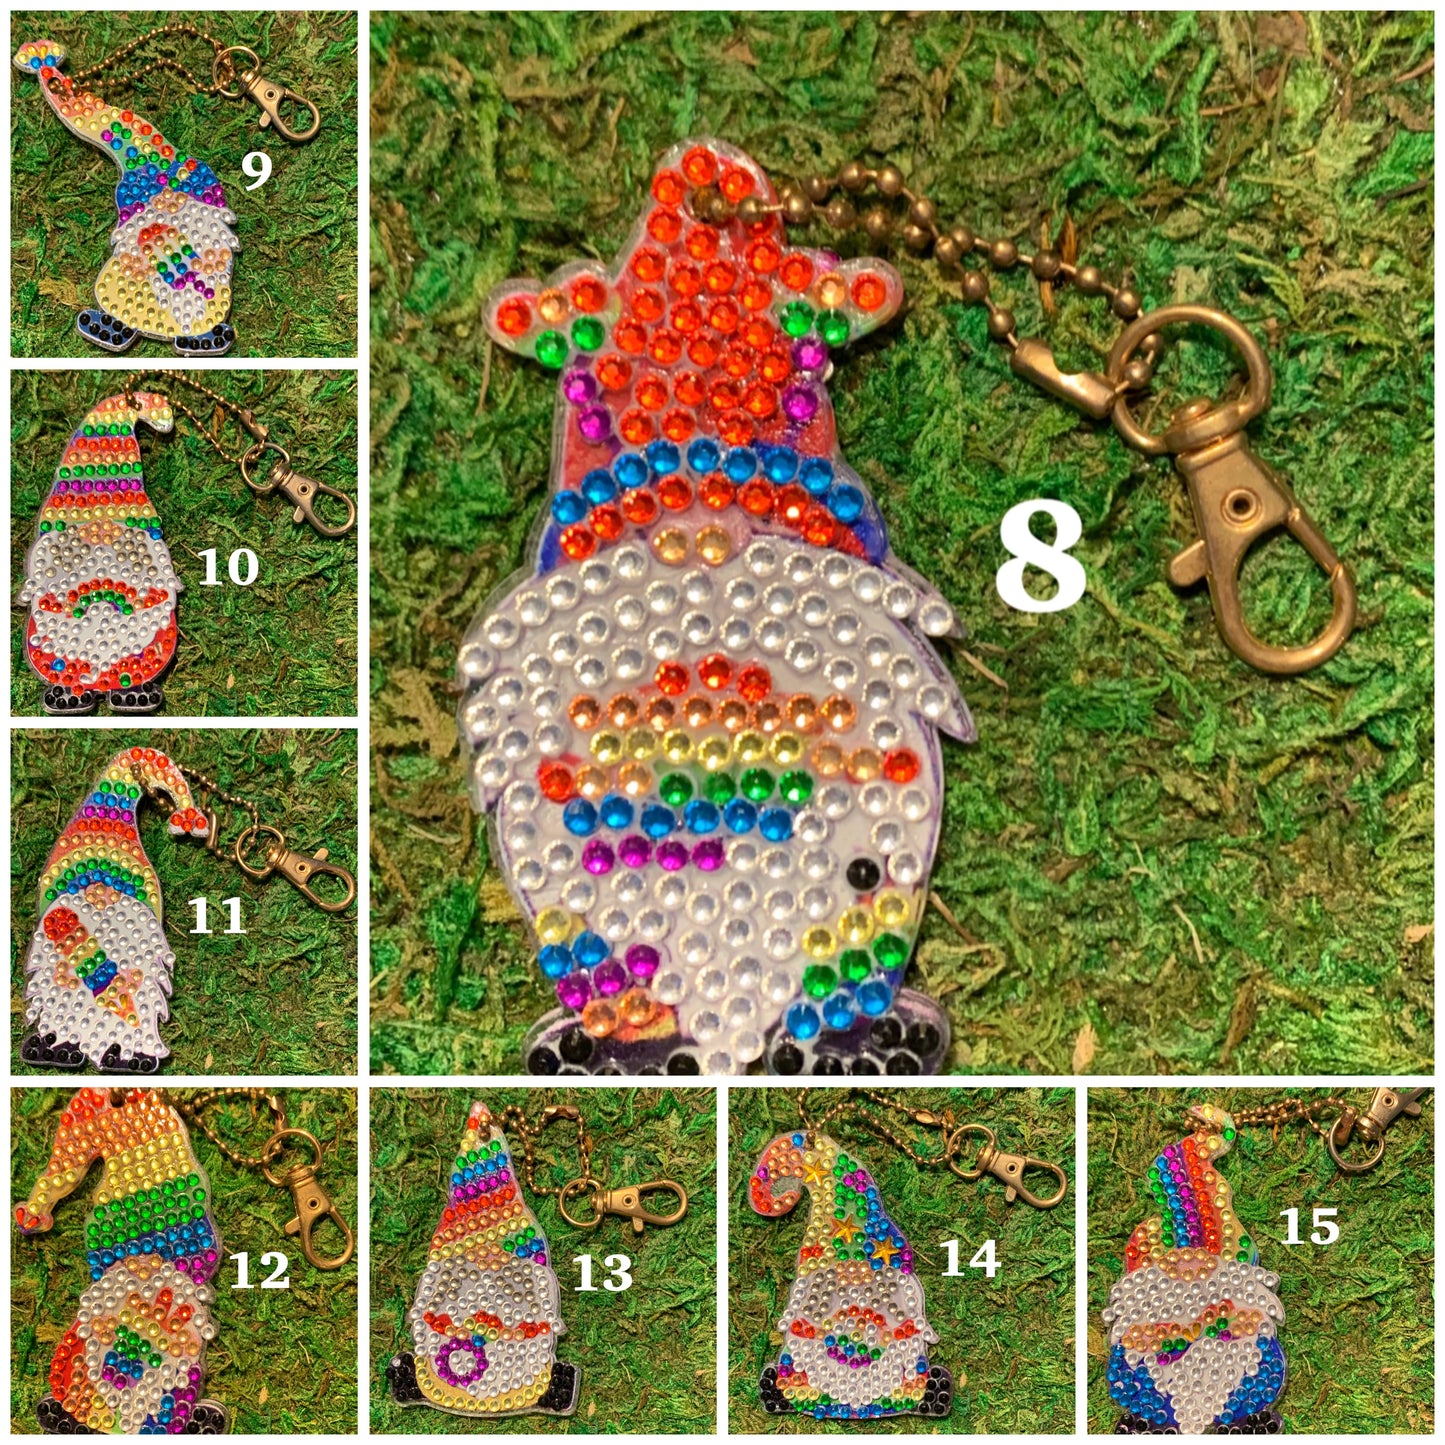 Diamond Painted Pride Gnome Keychains